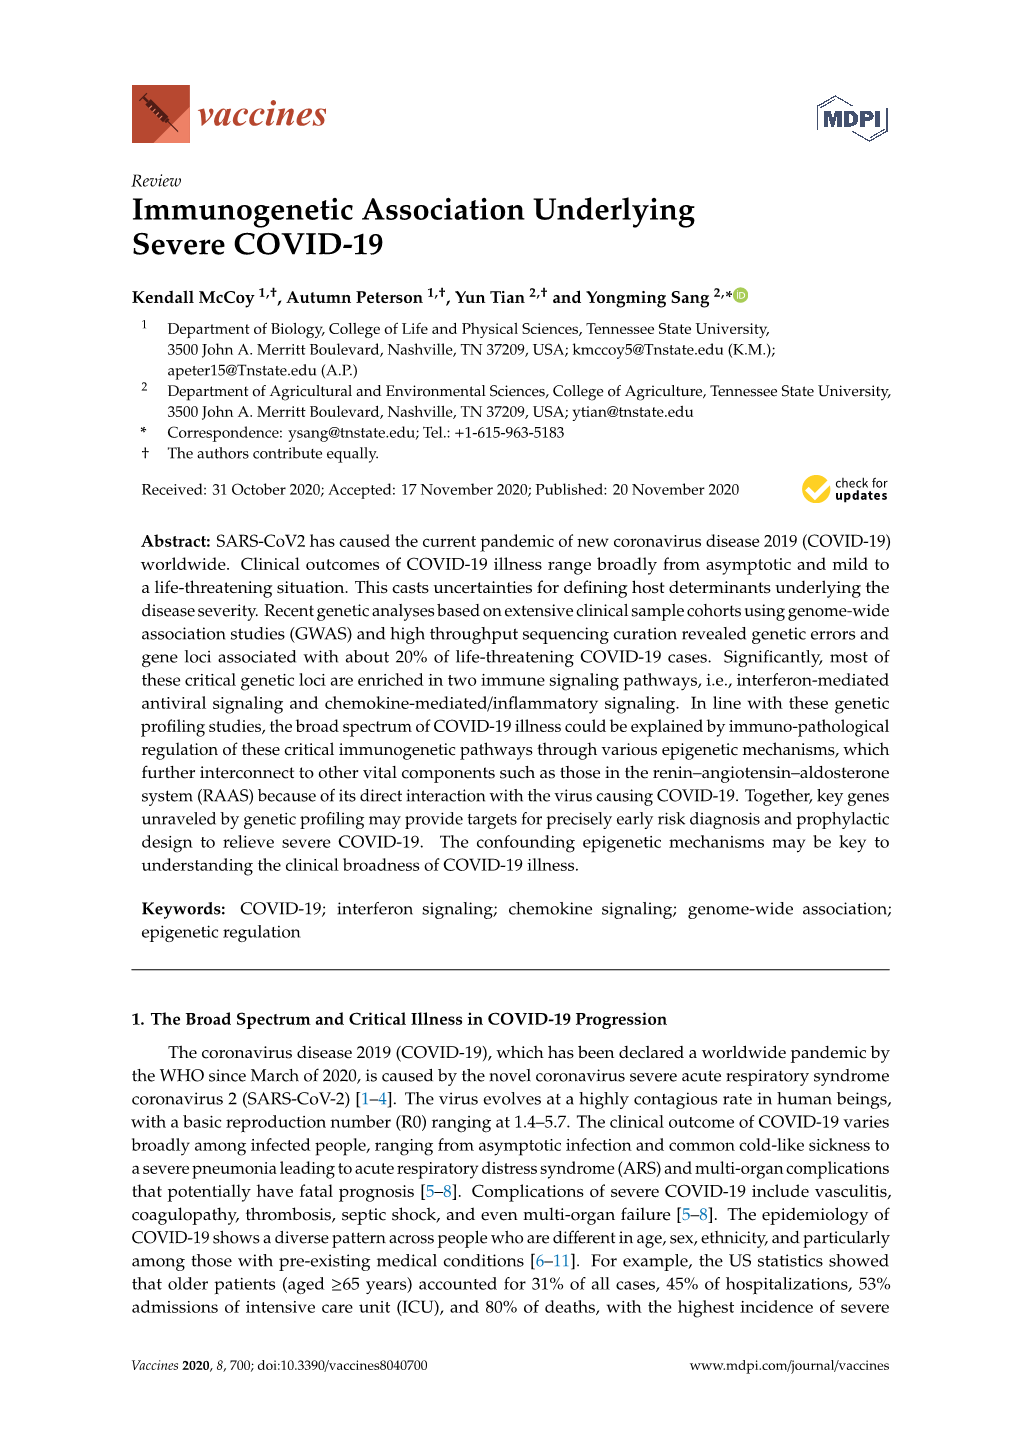 Immunogenetic Association Underlying Severe COVID-19